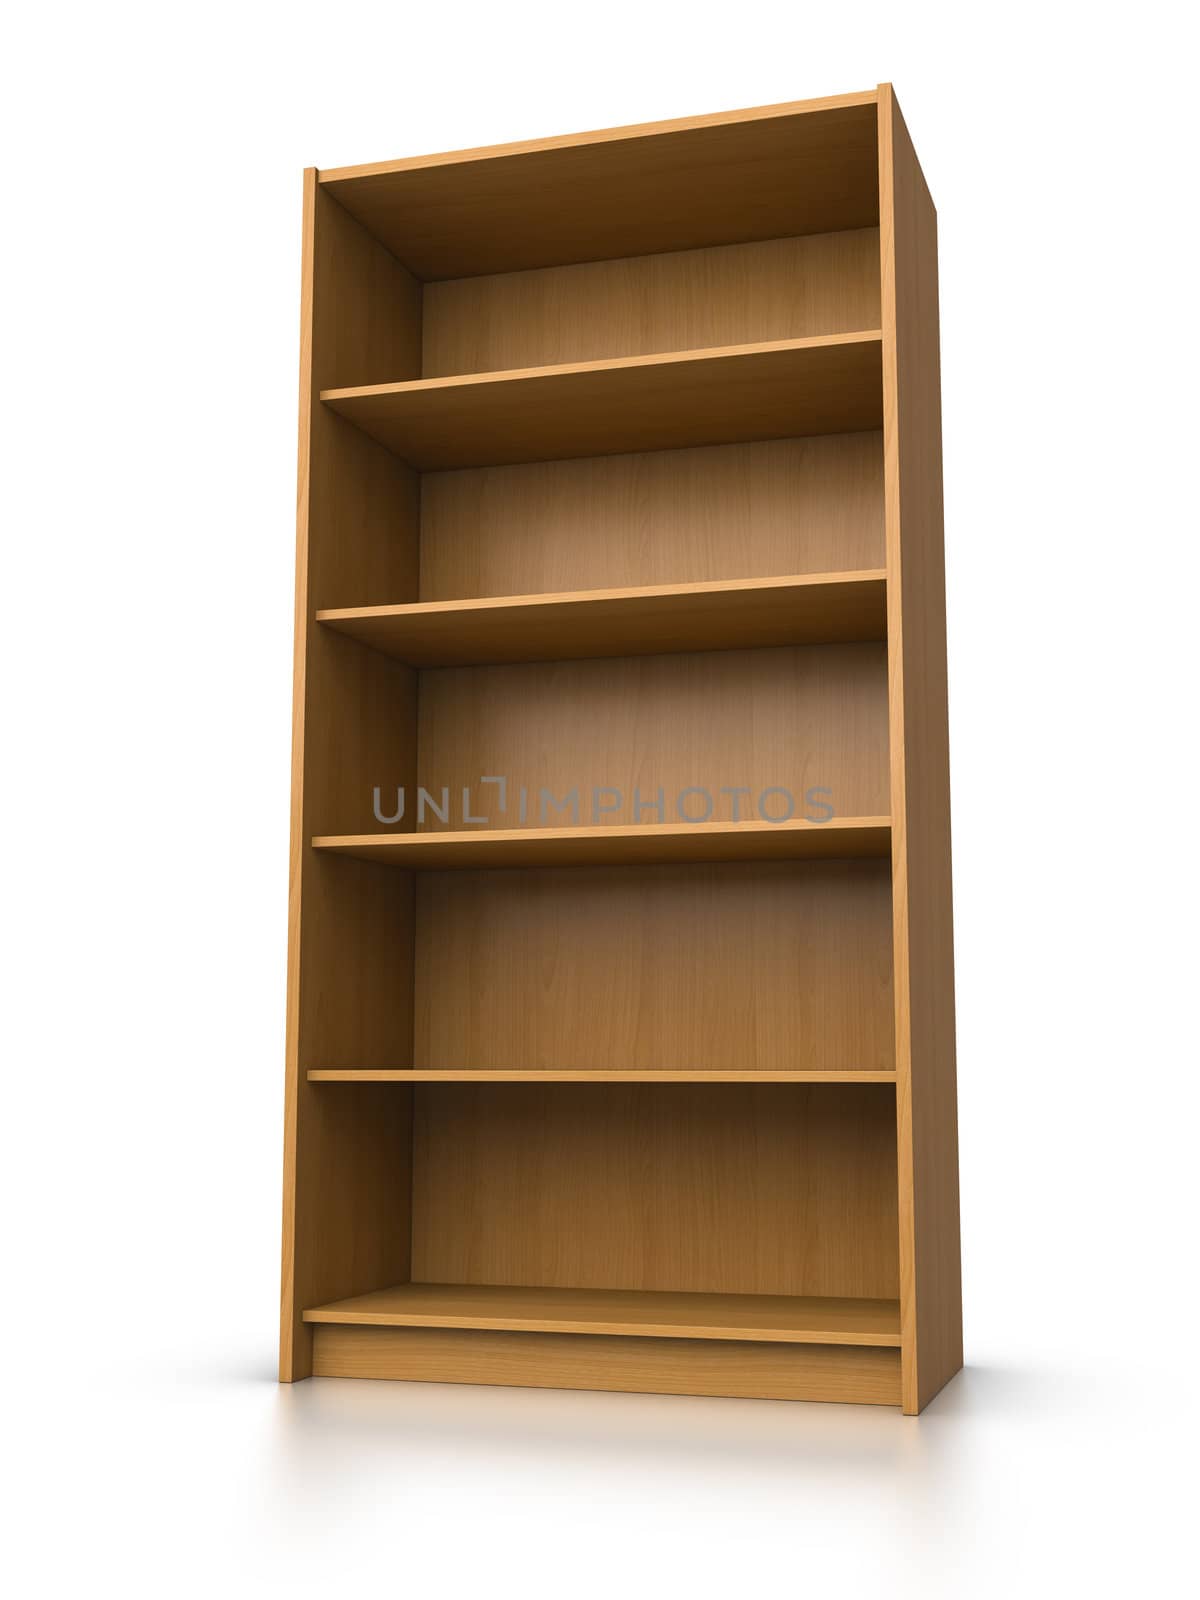 3D rendered empty bookshelf on white background.